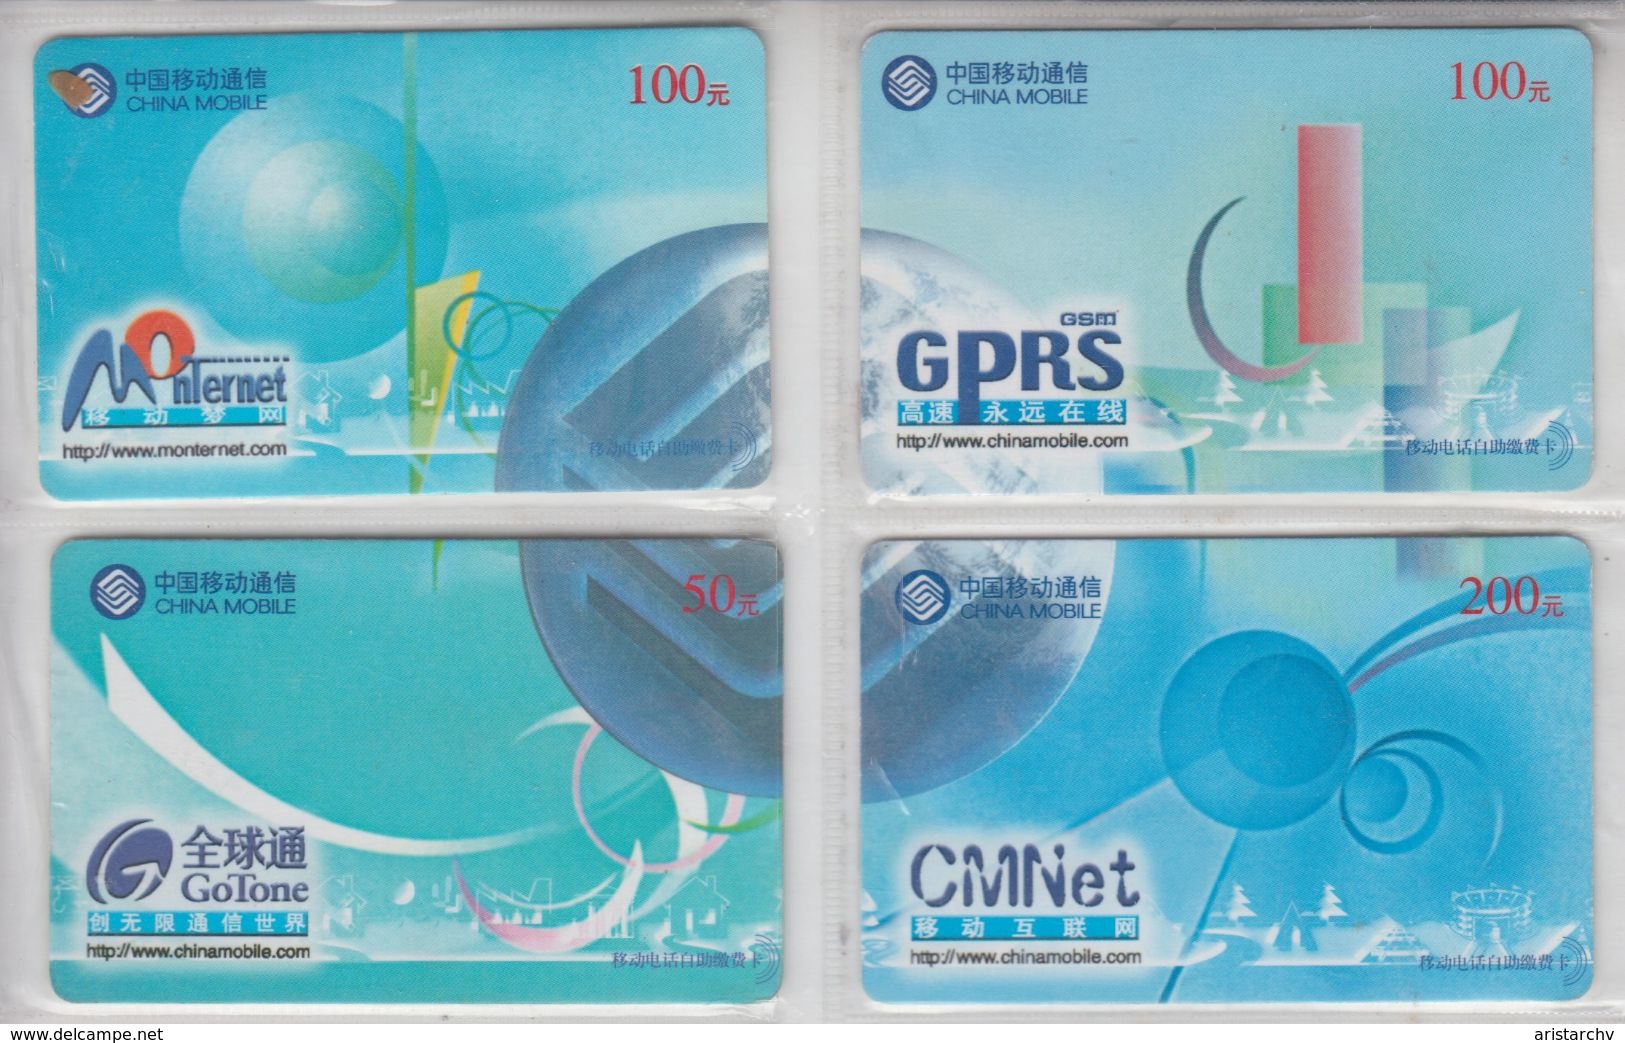 CHINA 2002 COMPTUTER INTERNET GSM GPRS GOTONE CMNET PUZZLE SET OF 4 CARDS - Puzzle